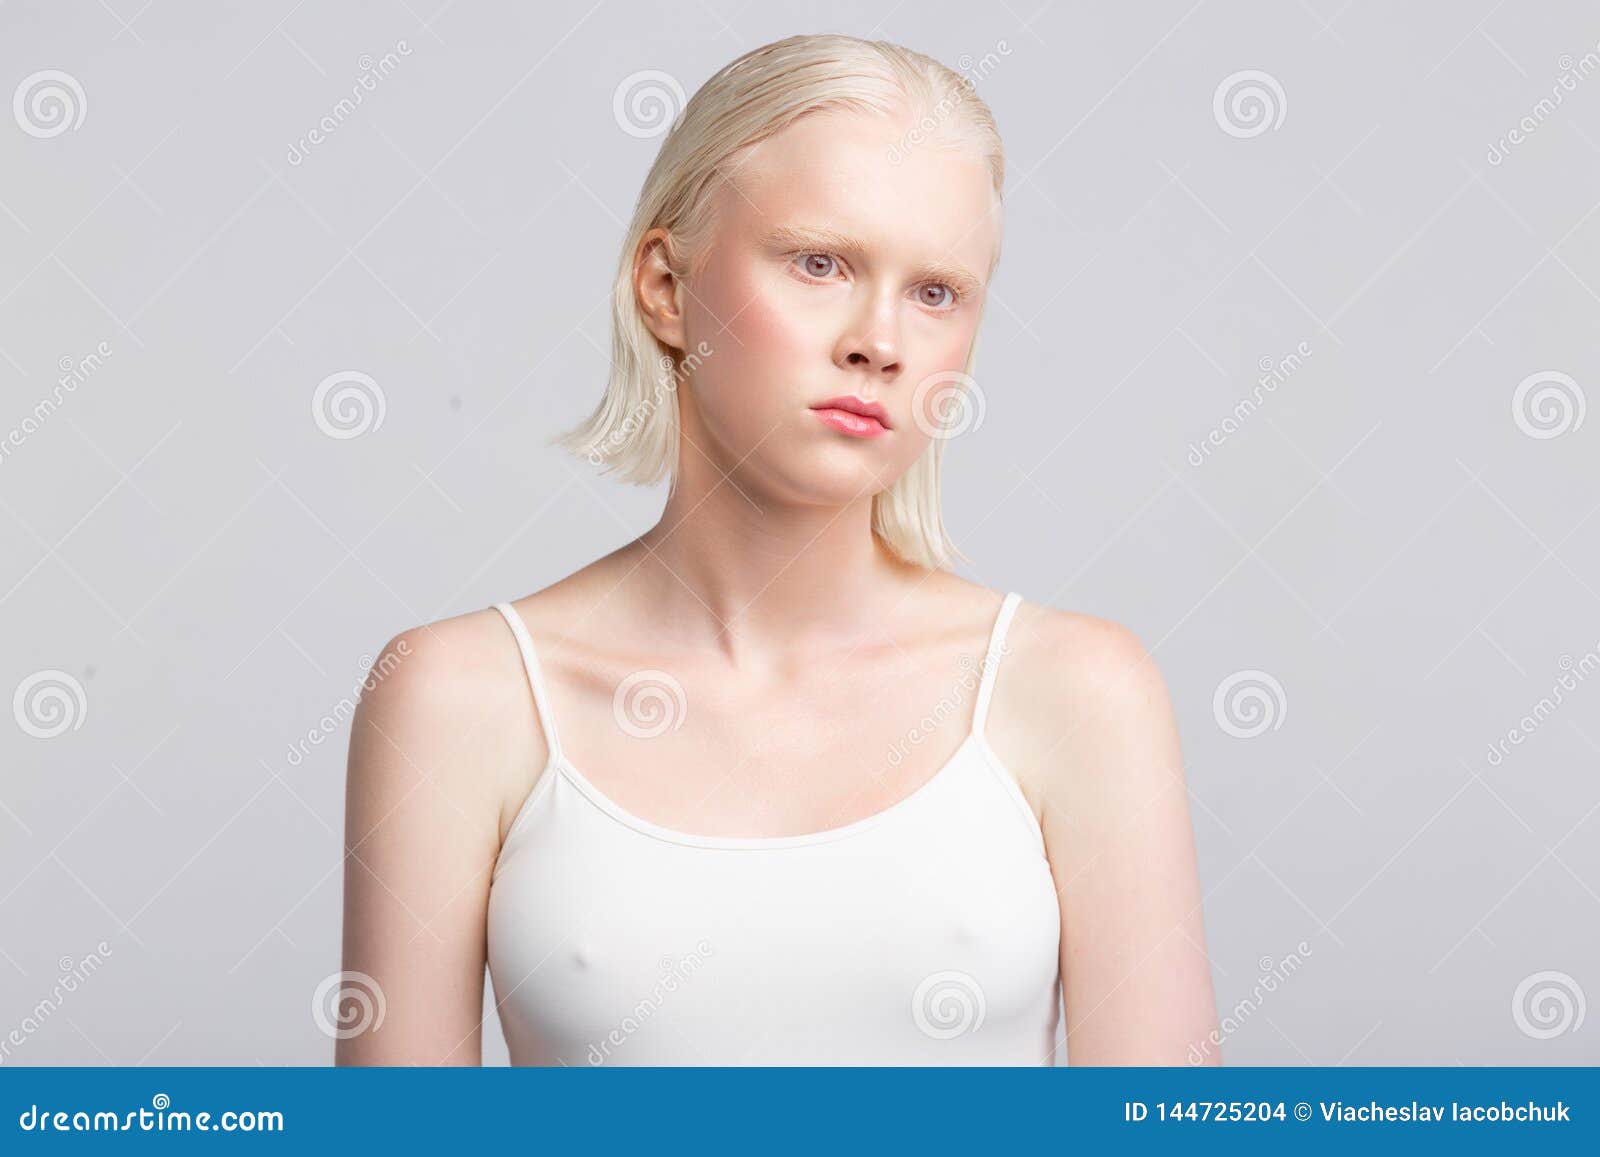 https://thumbs.dreamstime.com/z/women-white-skin-wearing-camisole-having-strange-face-expression-grey-eyed-woman-144725204.jpg